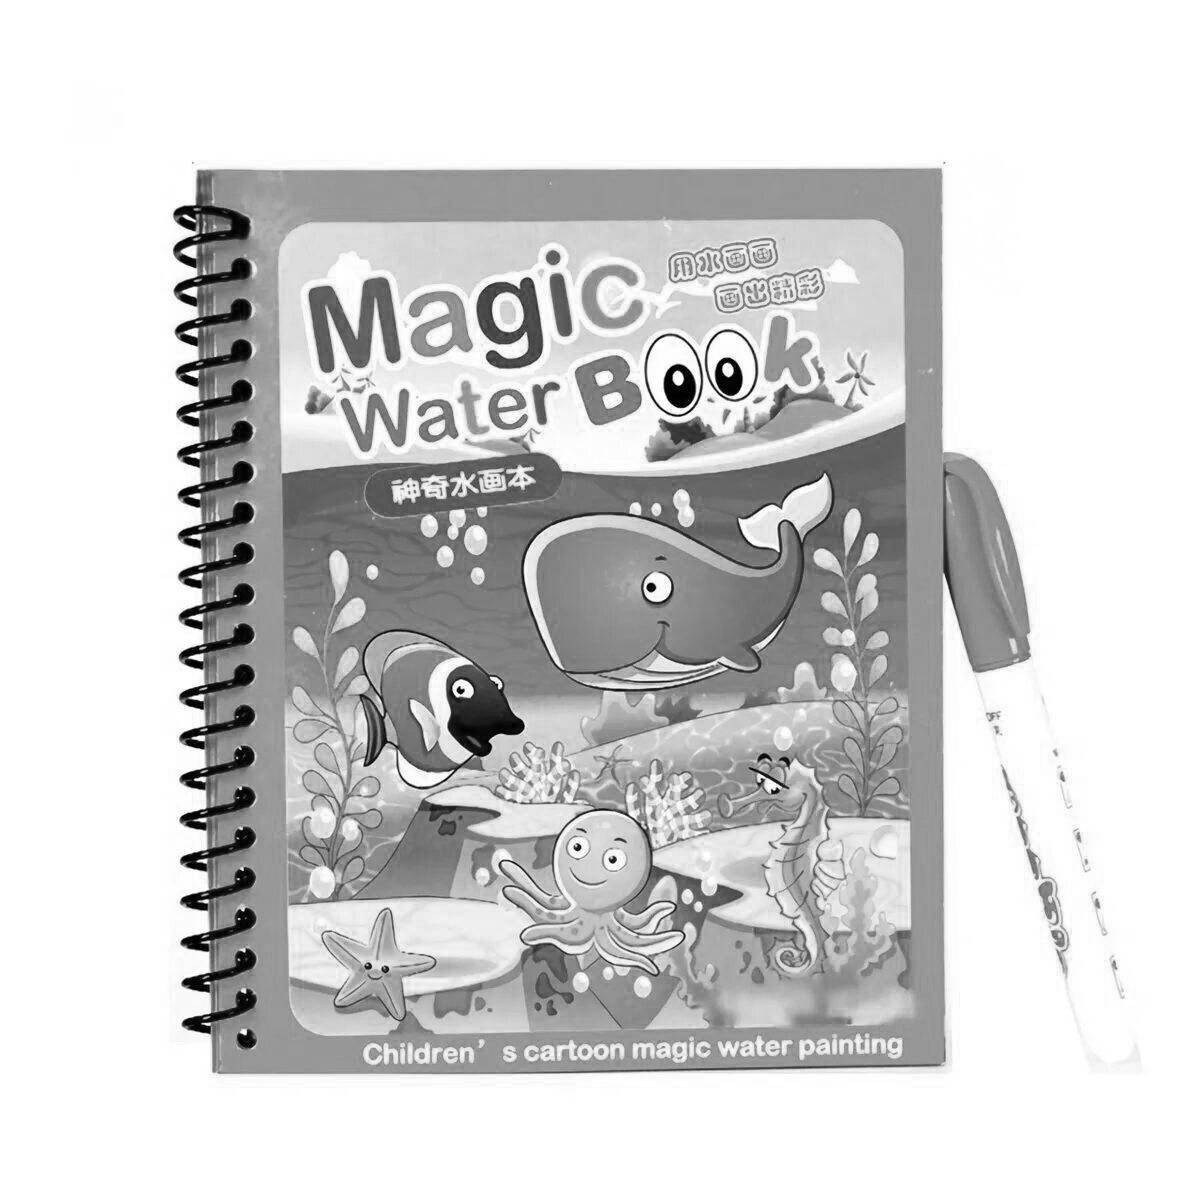 Colorful magic water coloring book